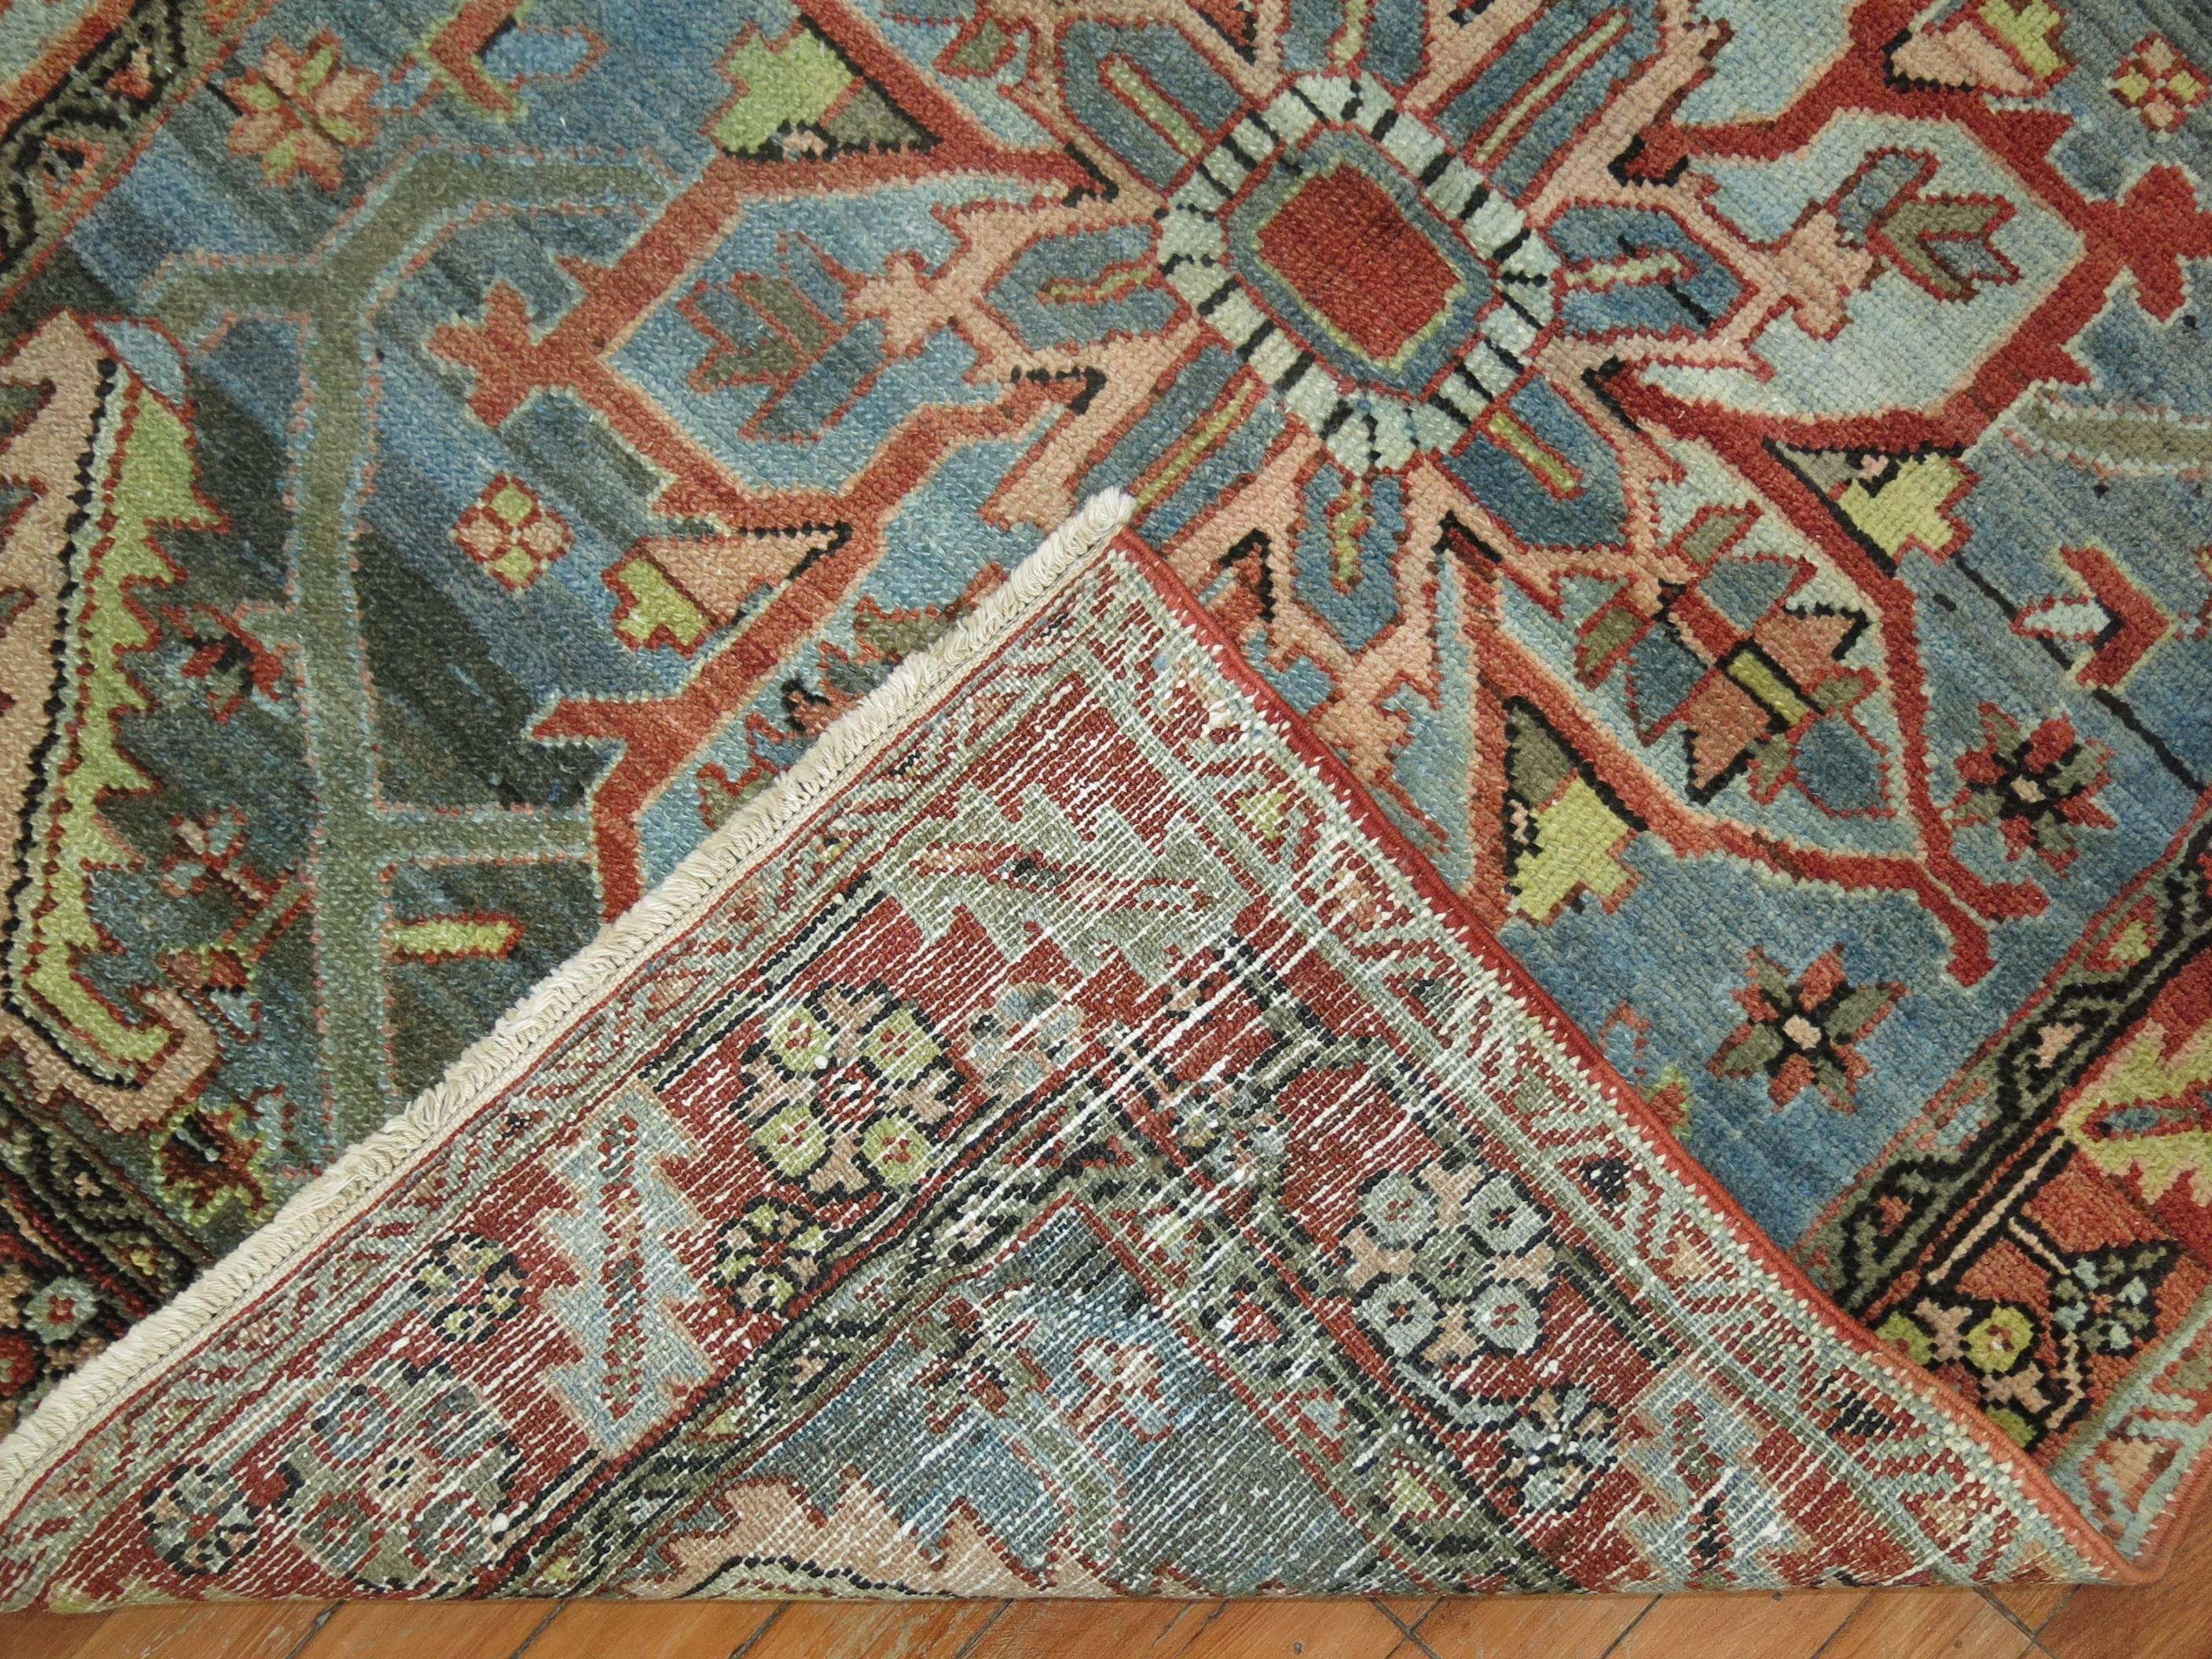 High decorative Persian Heriz rug with a rare gray-blue field tone,

circa 1920, measures: 3'6